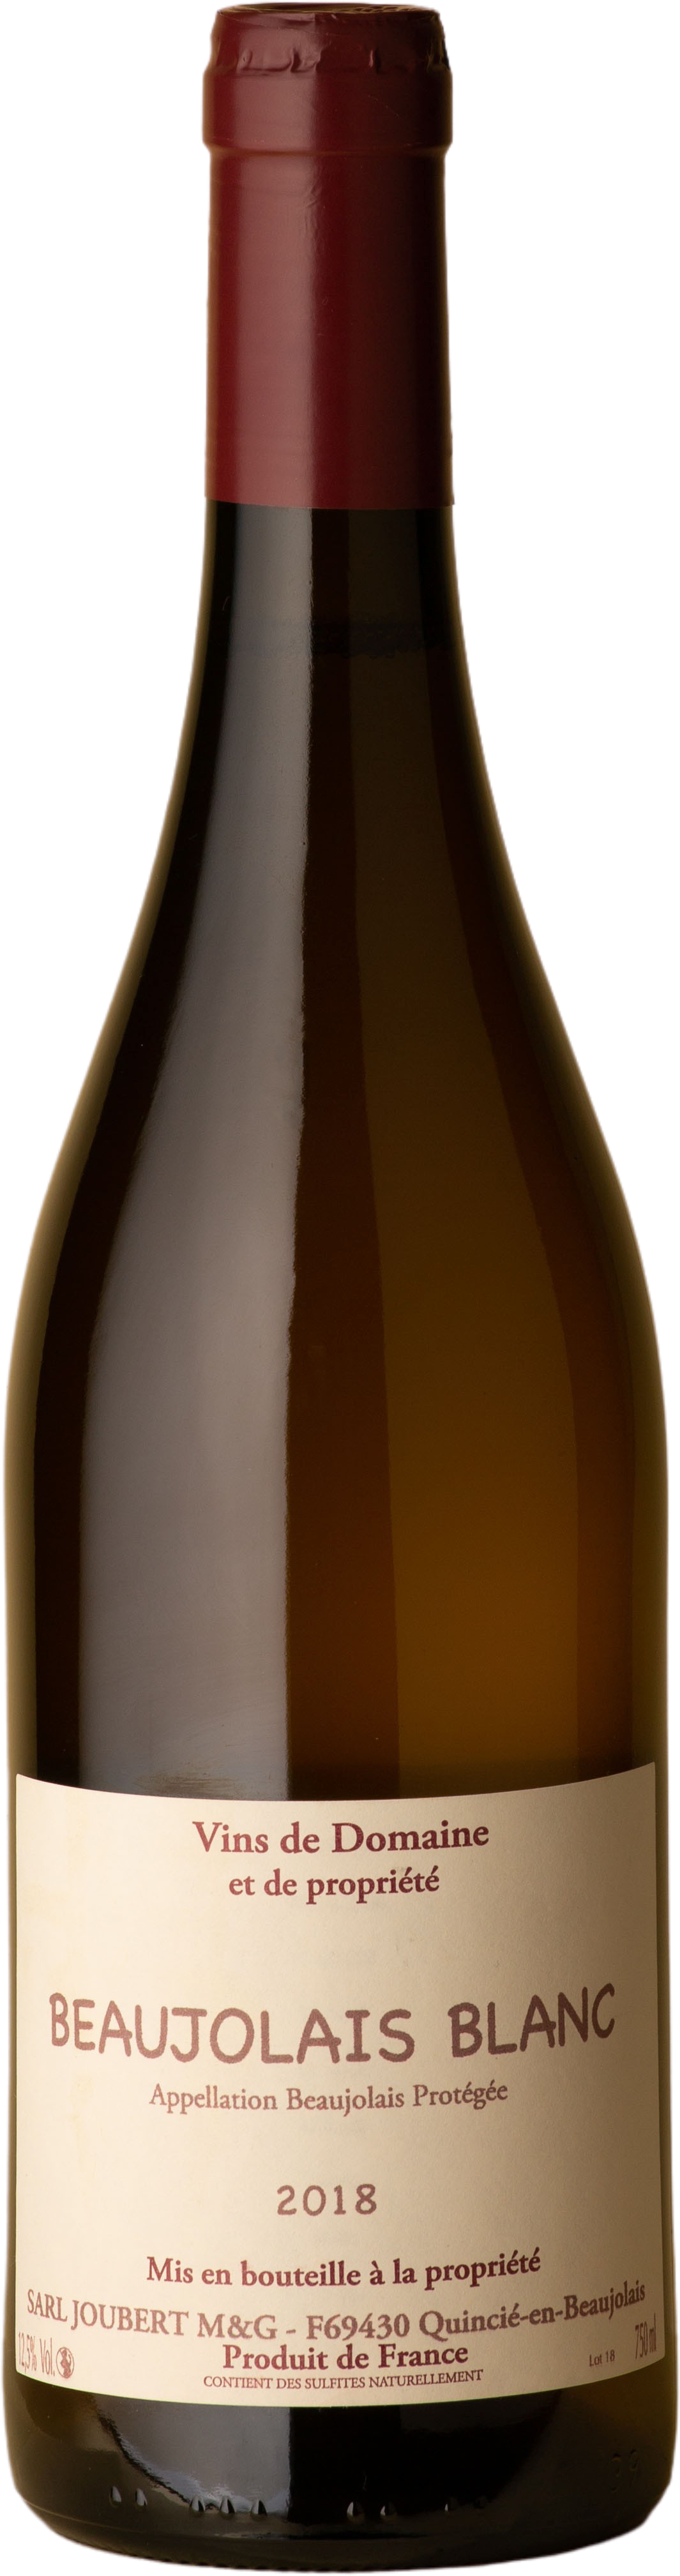 Marcel Joubert - Beaujolais Blanc Chardonnay 2018 White Wine